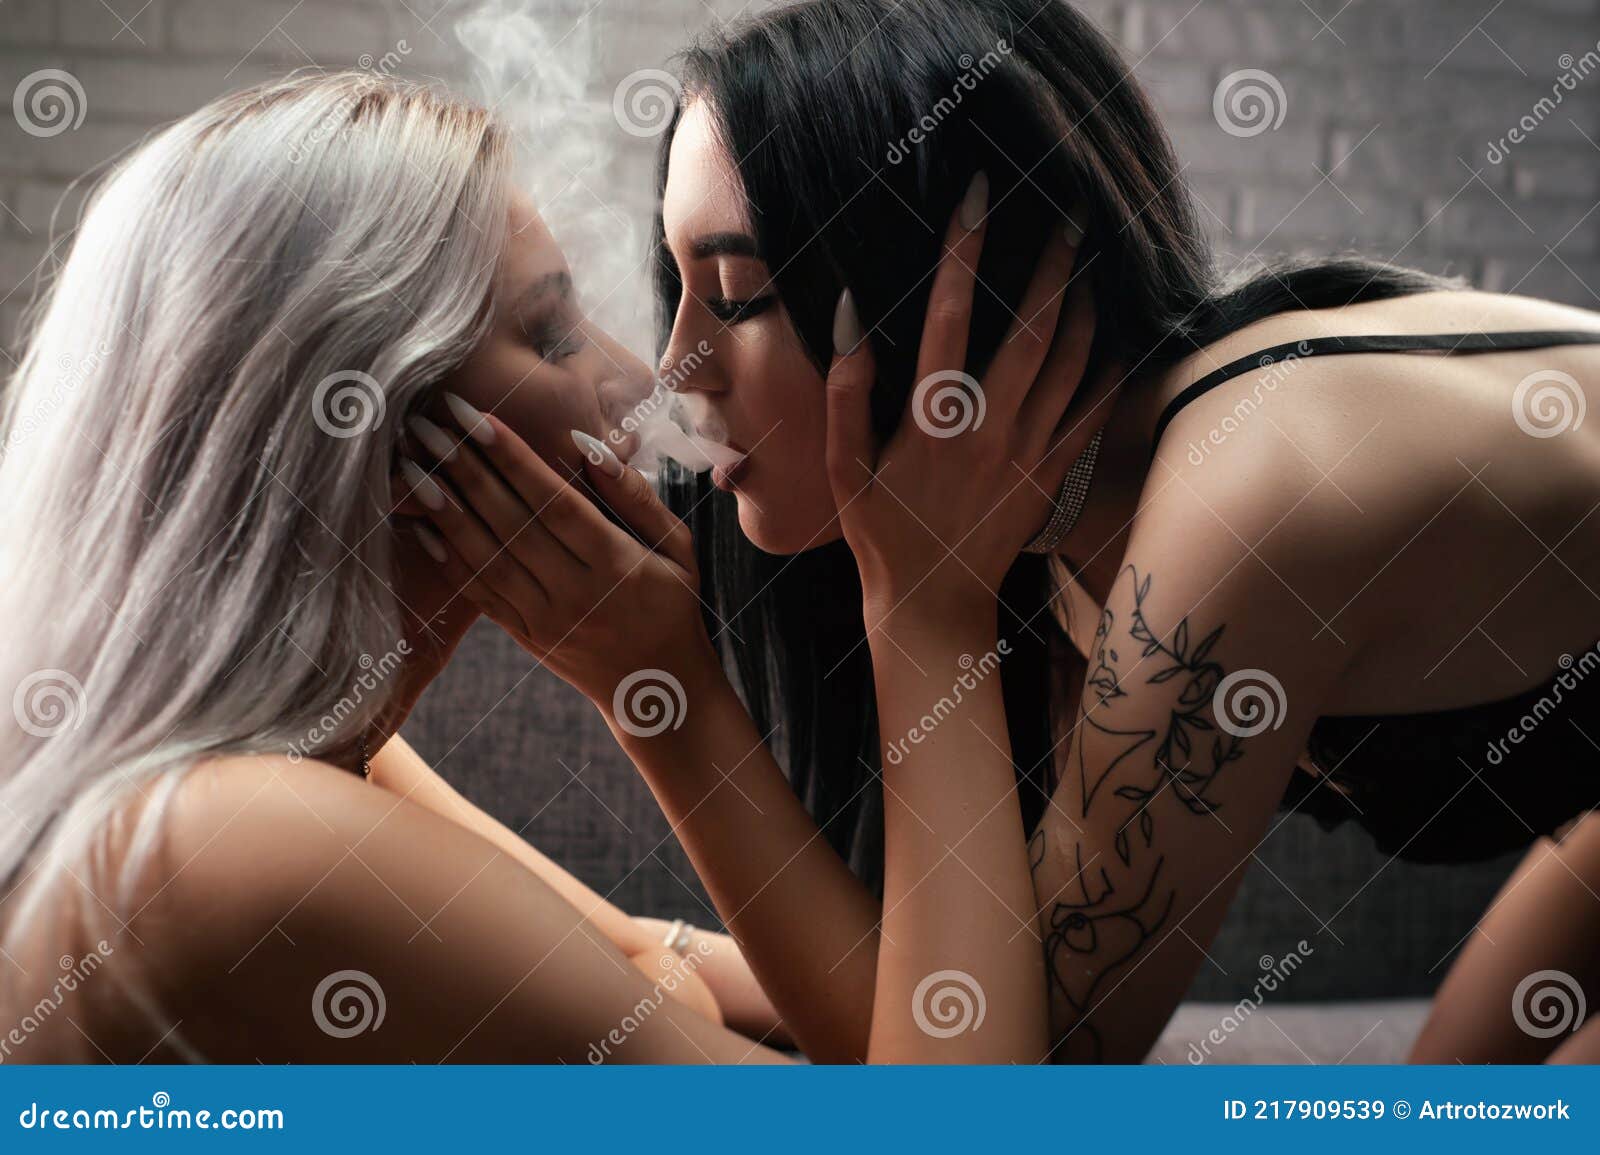 Lesbian Bikini Girls Kissing